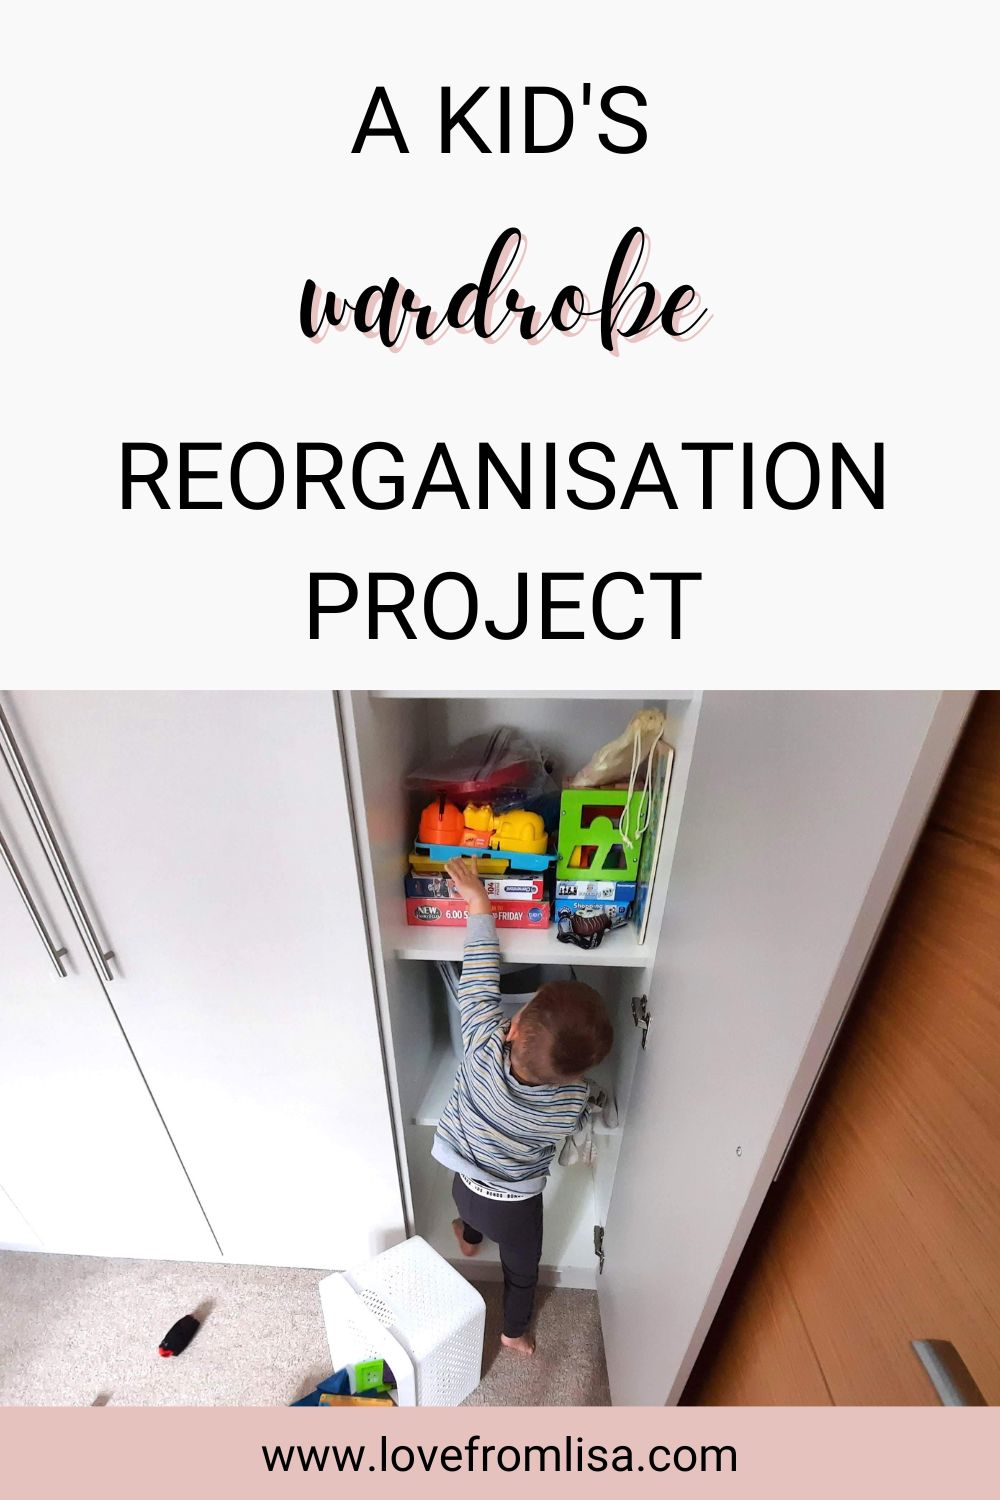 A kid's wardrobe reorganisation project